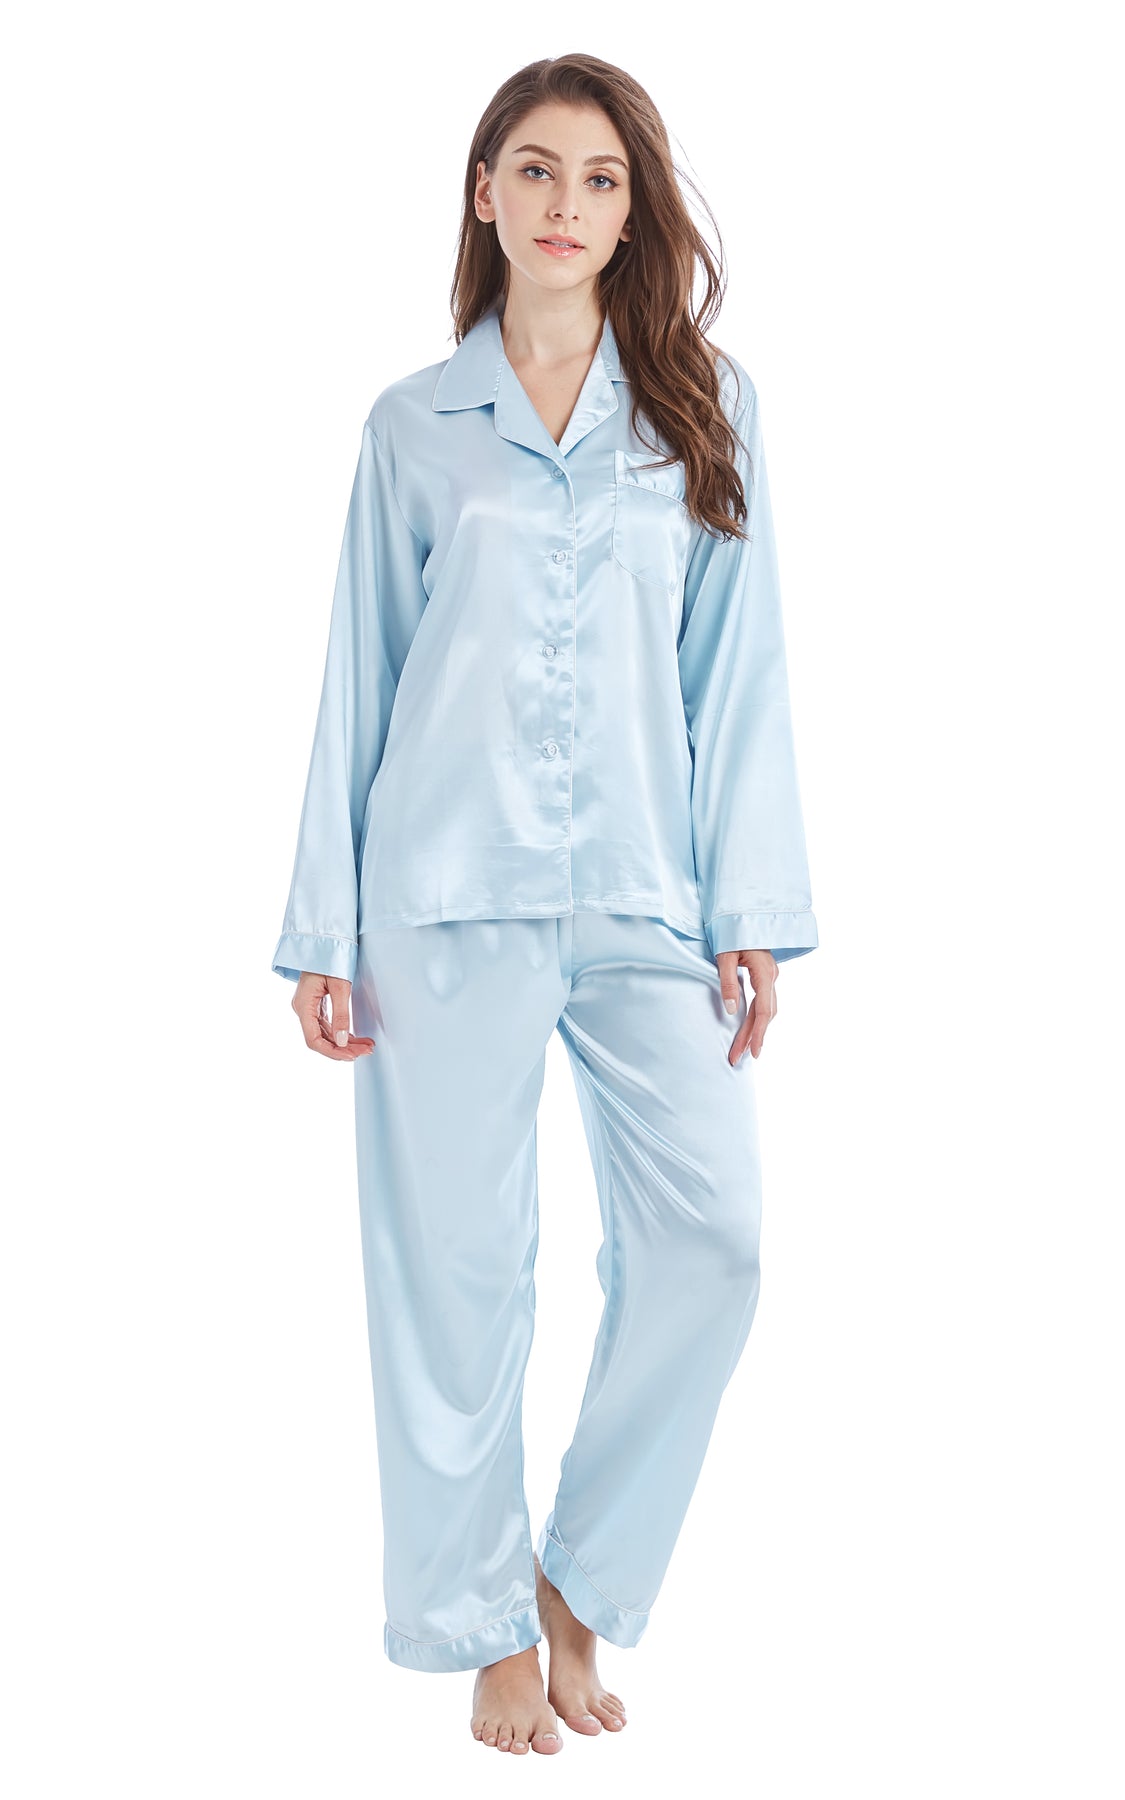 Women's Silk Satin Pajama Set Long Sleeve-Light Blue with White Piping ...